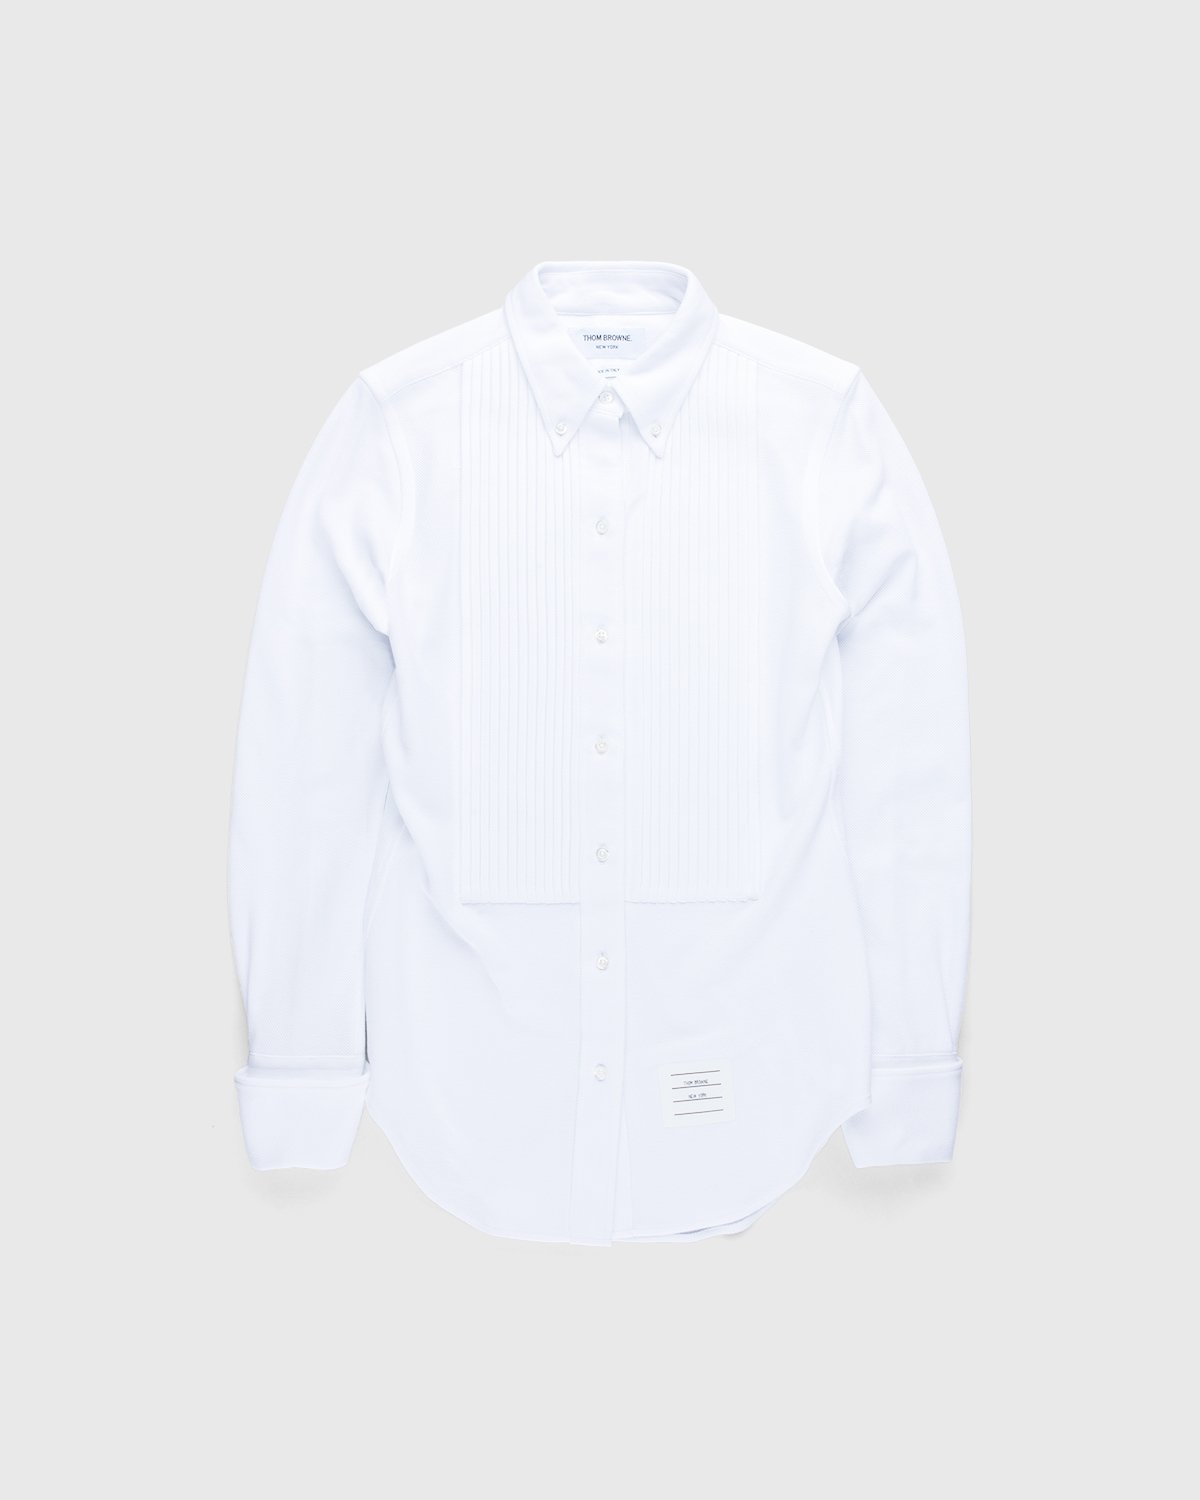 Thom Browne x Highsnobiety - Women’s Button-Down Shirt White - Clothing - White - Image 1